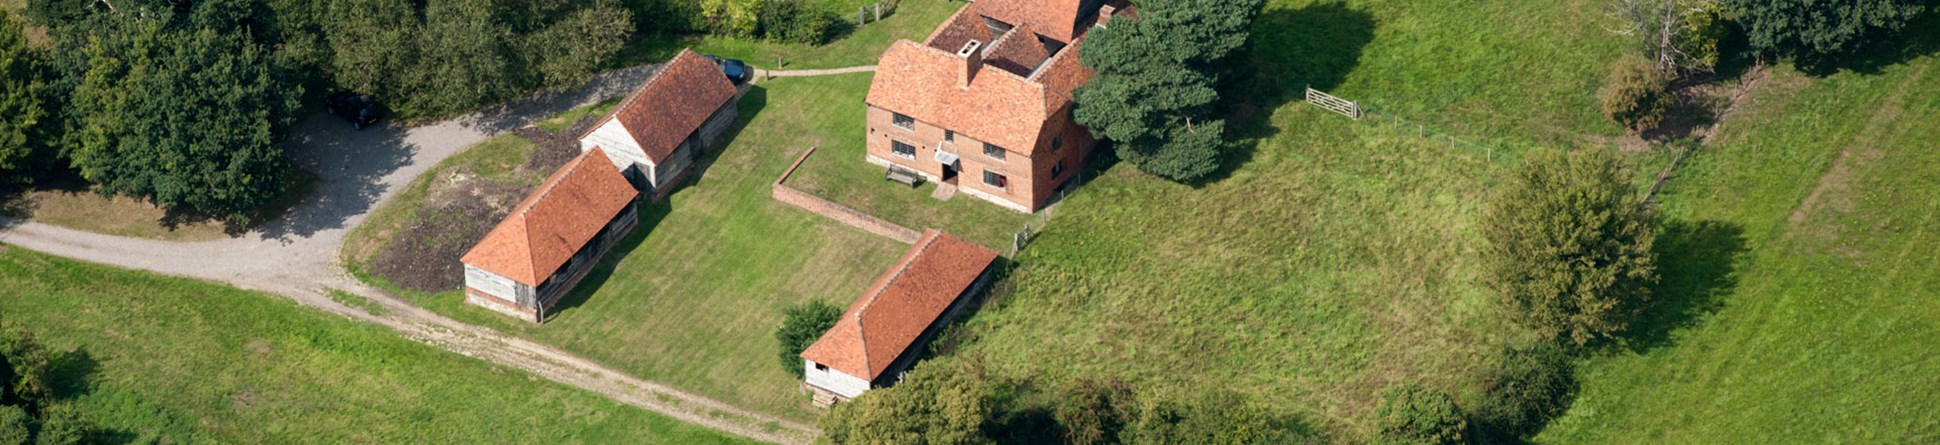 Aerial view of farm buildings.